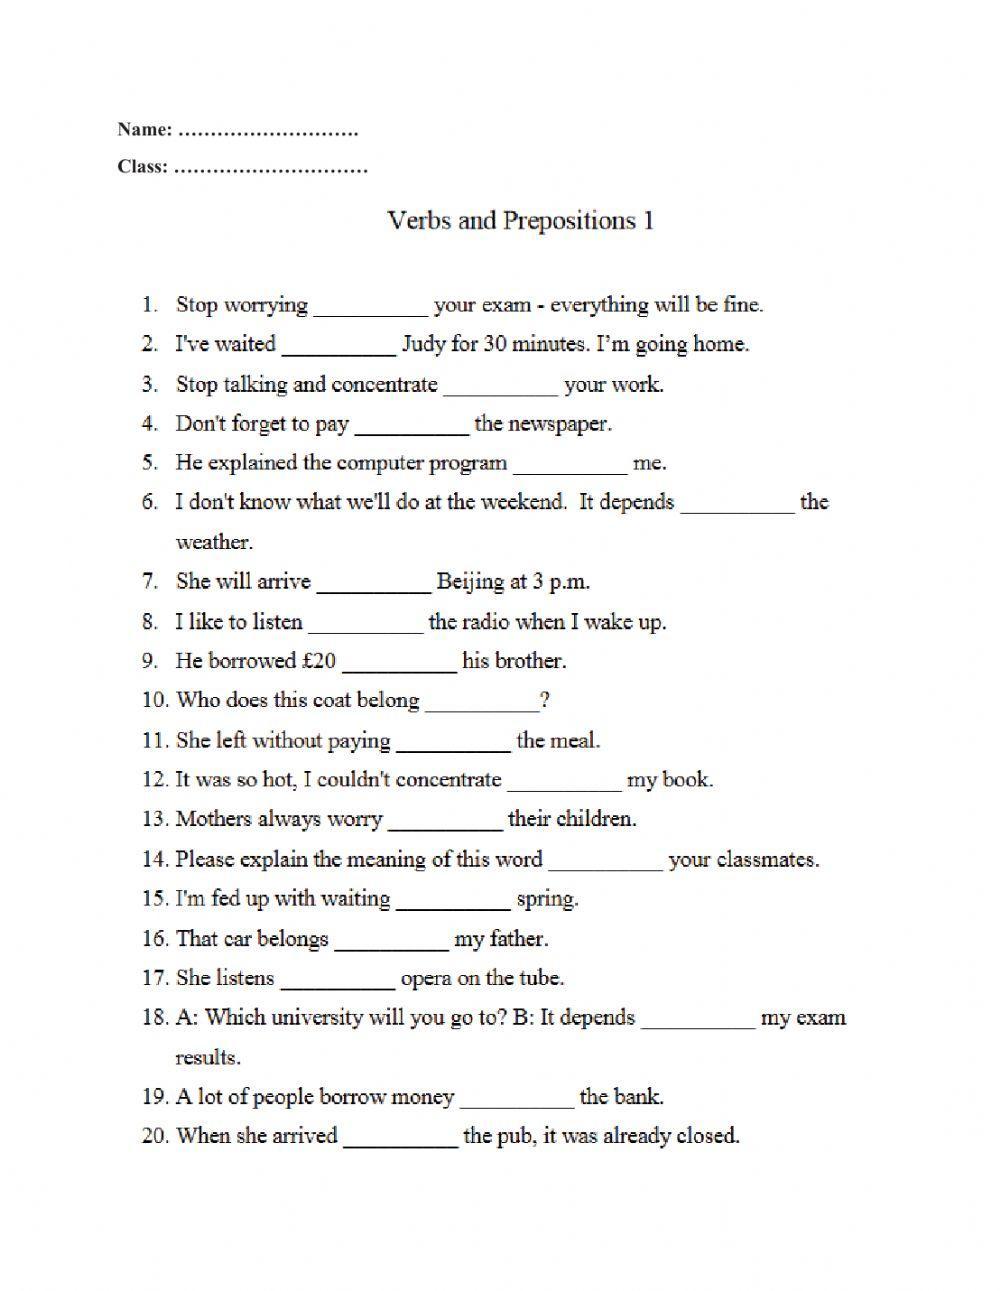 Verb + Preposition